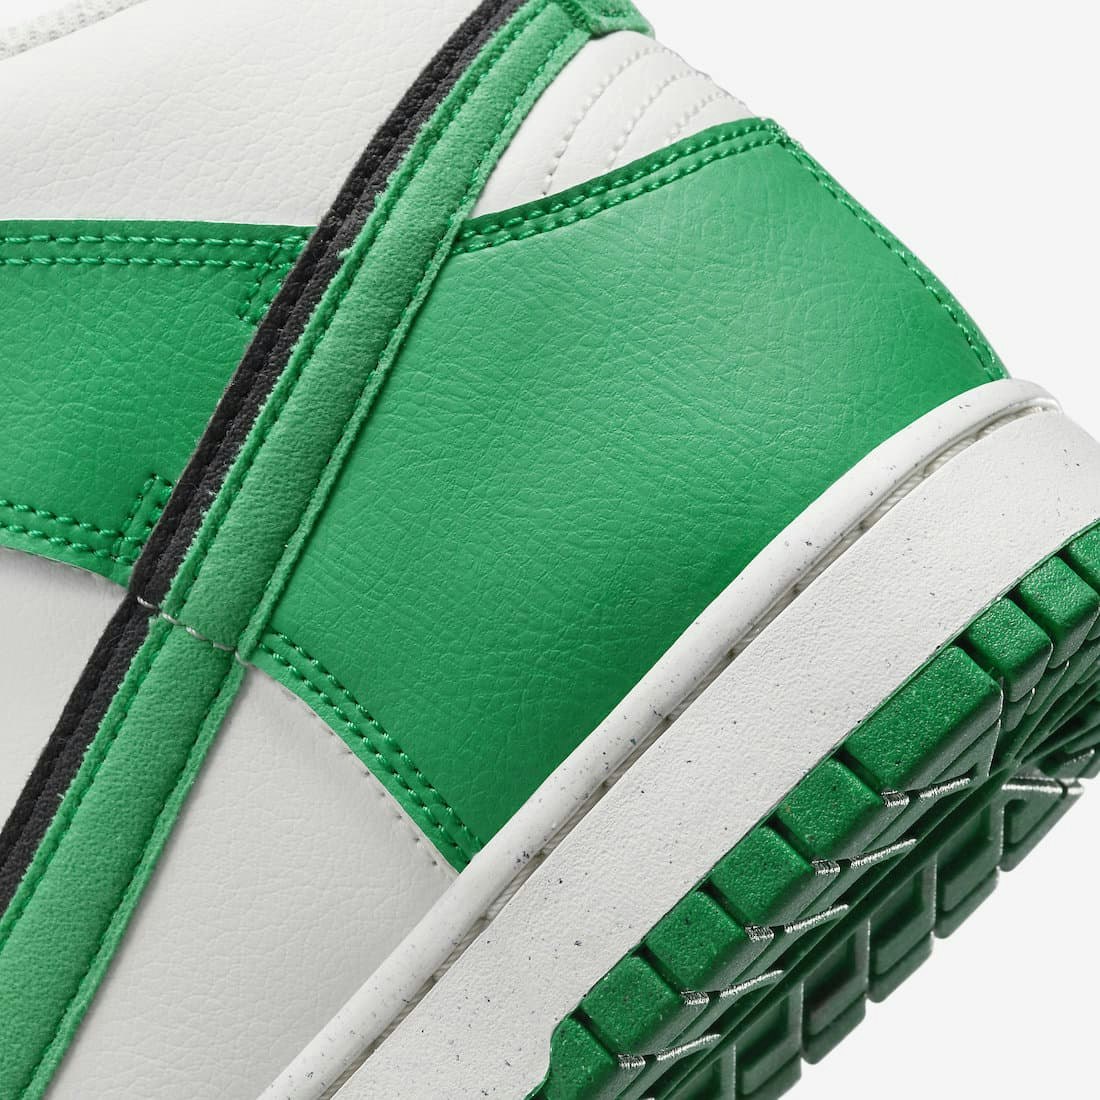 Nike Dunk High Retro SE “Stadium Green”